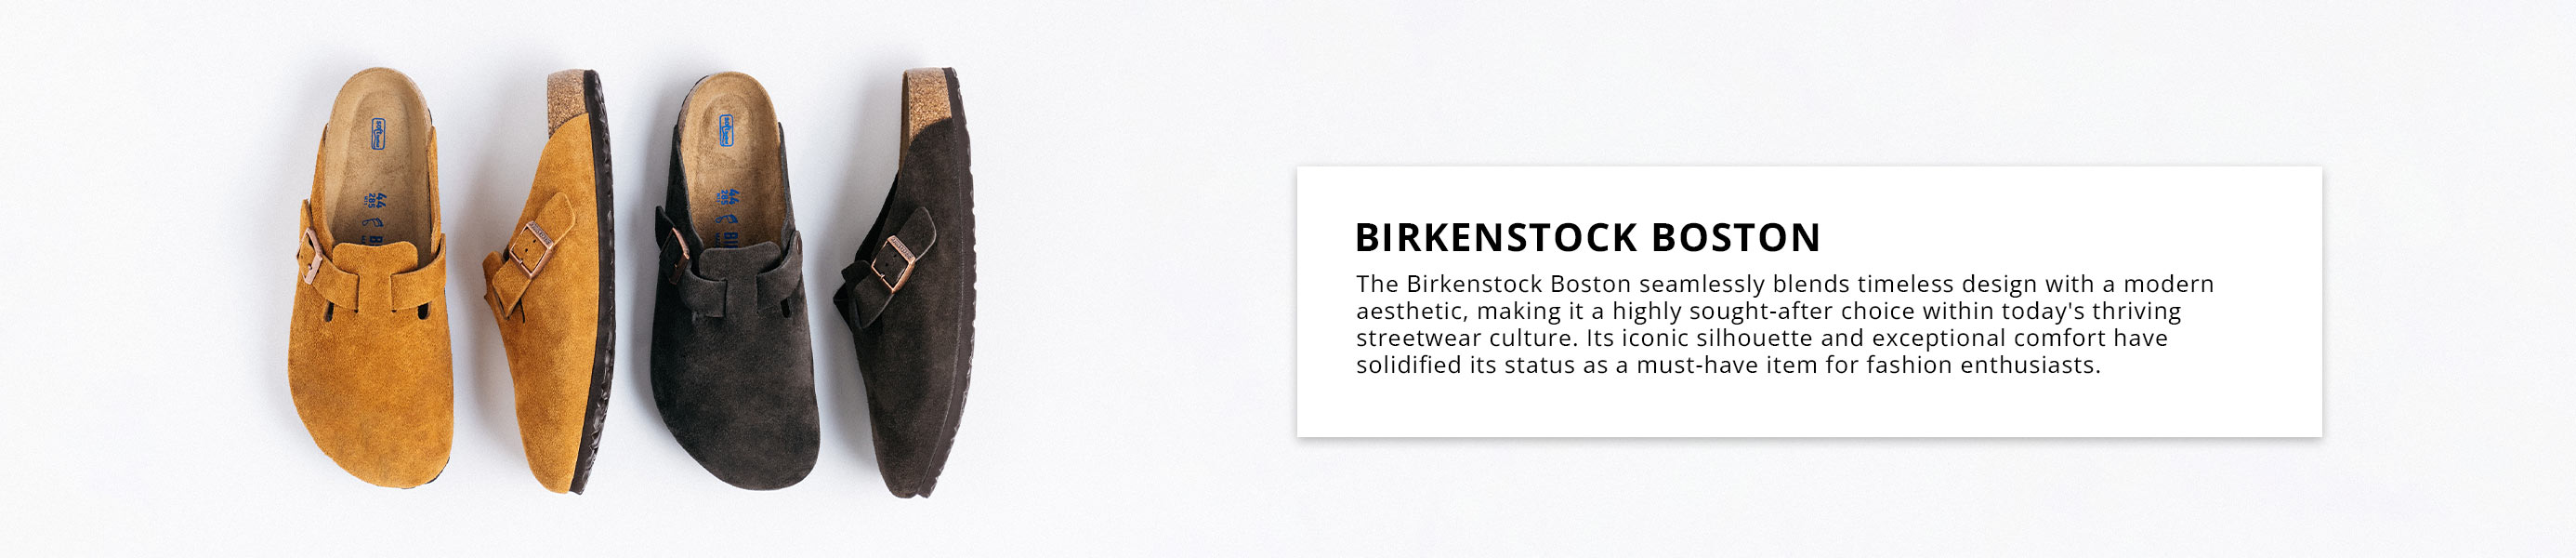 Birkenstock Boston